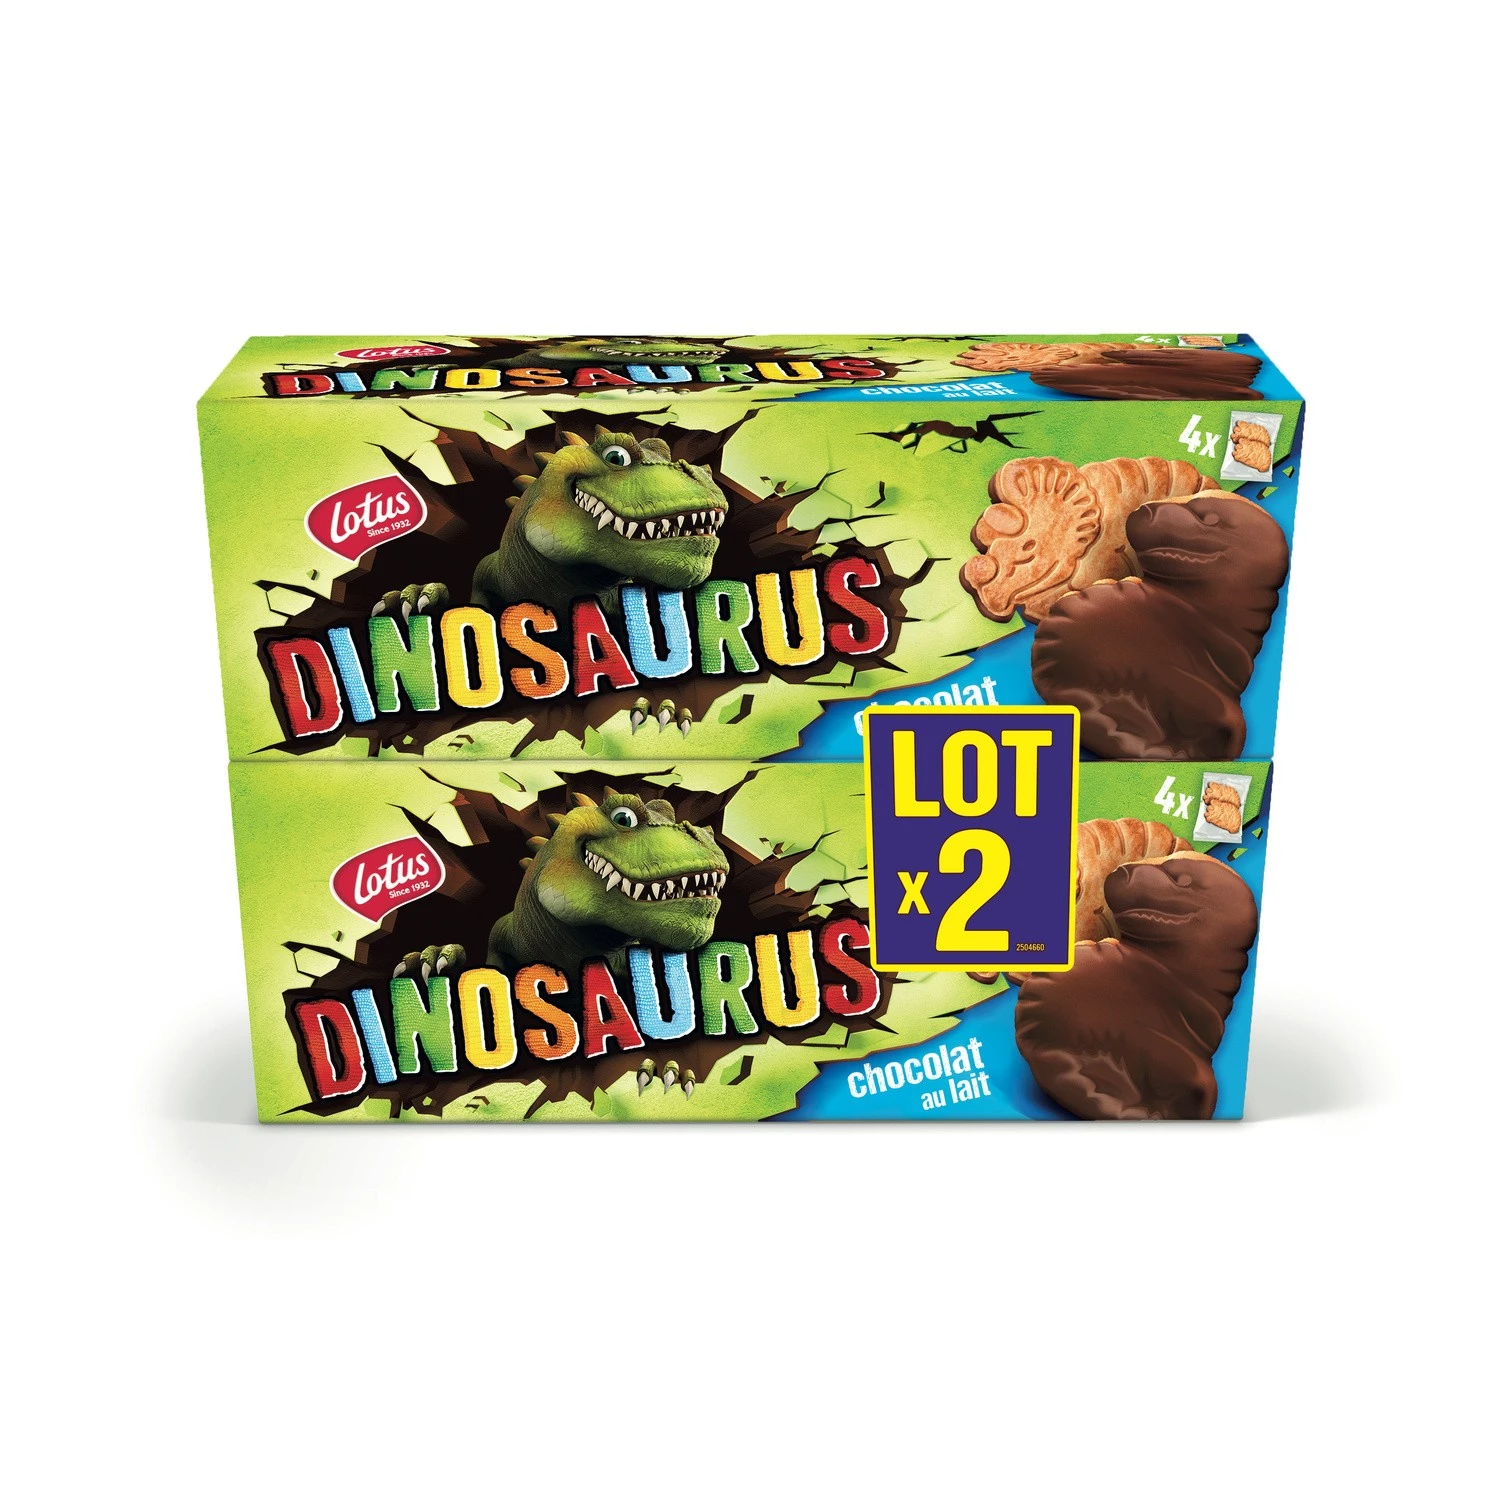 Dinosaurus melkchocoladekoekjes Familiegrootte 2x225g - LOTUS